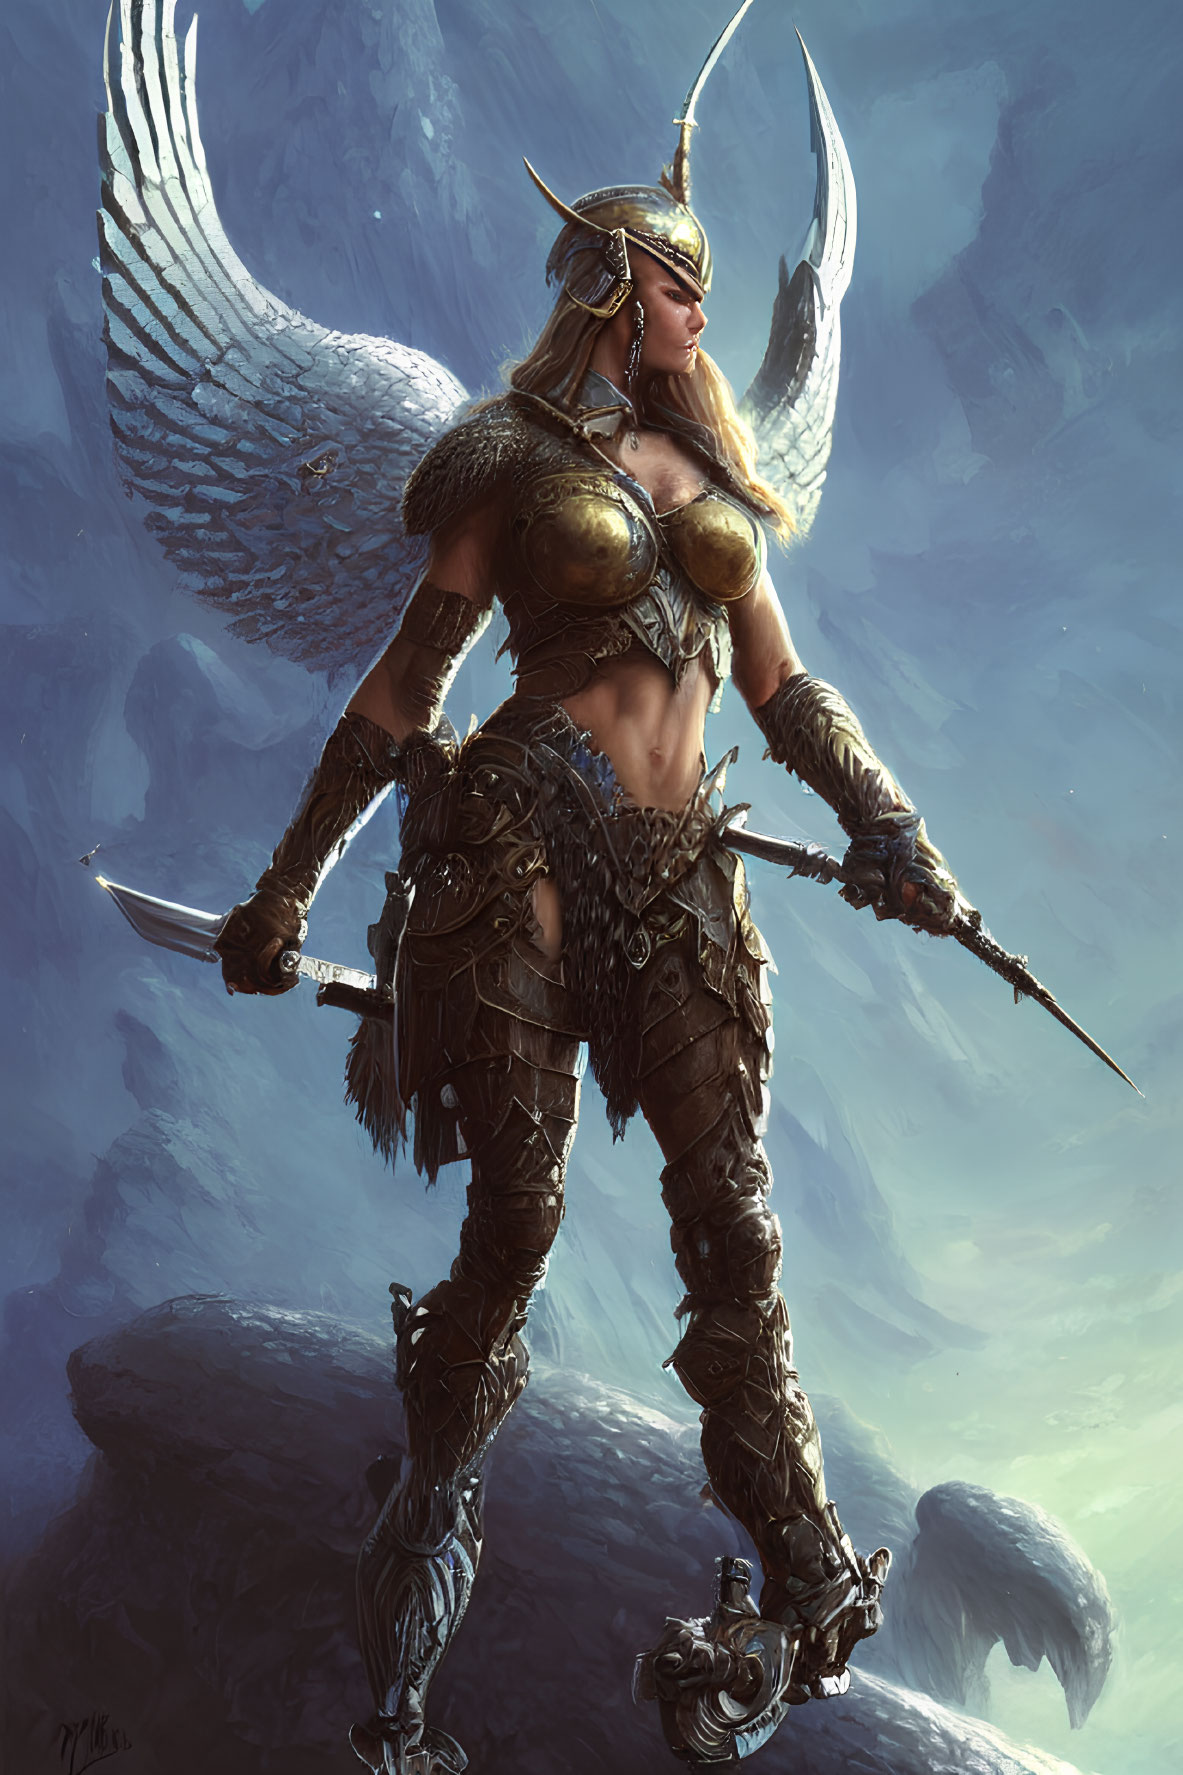 Warrior in golden armor with angelic wings and horned helmet.